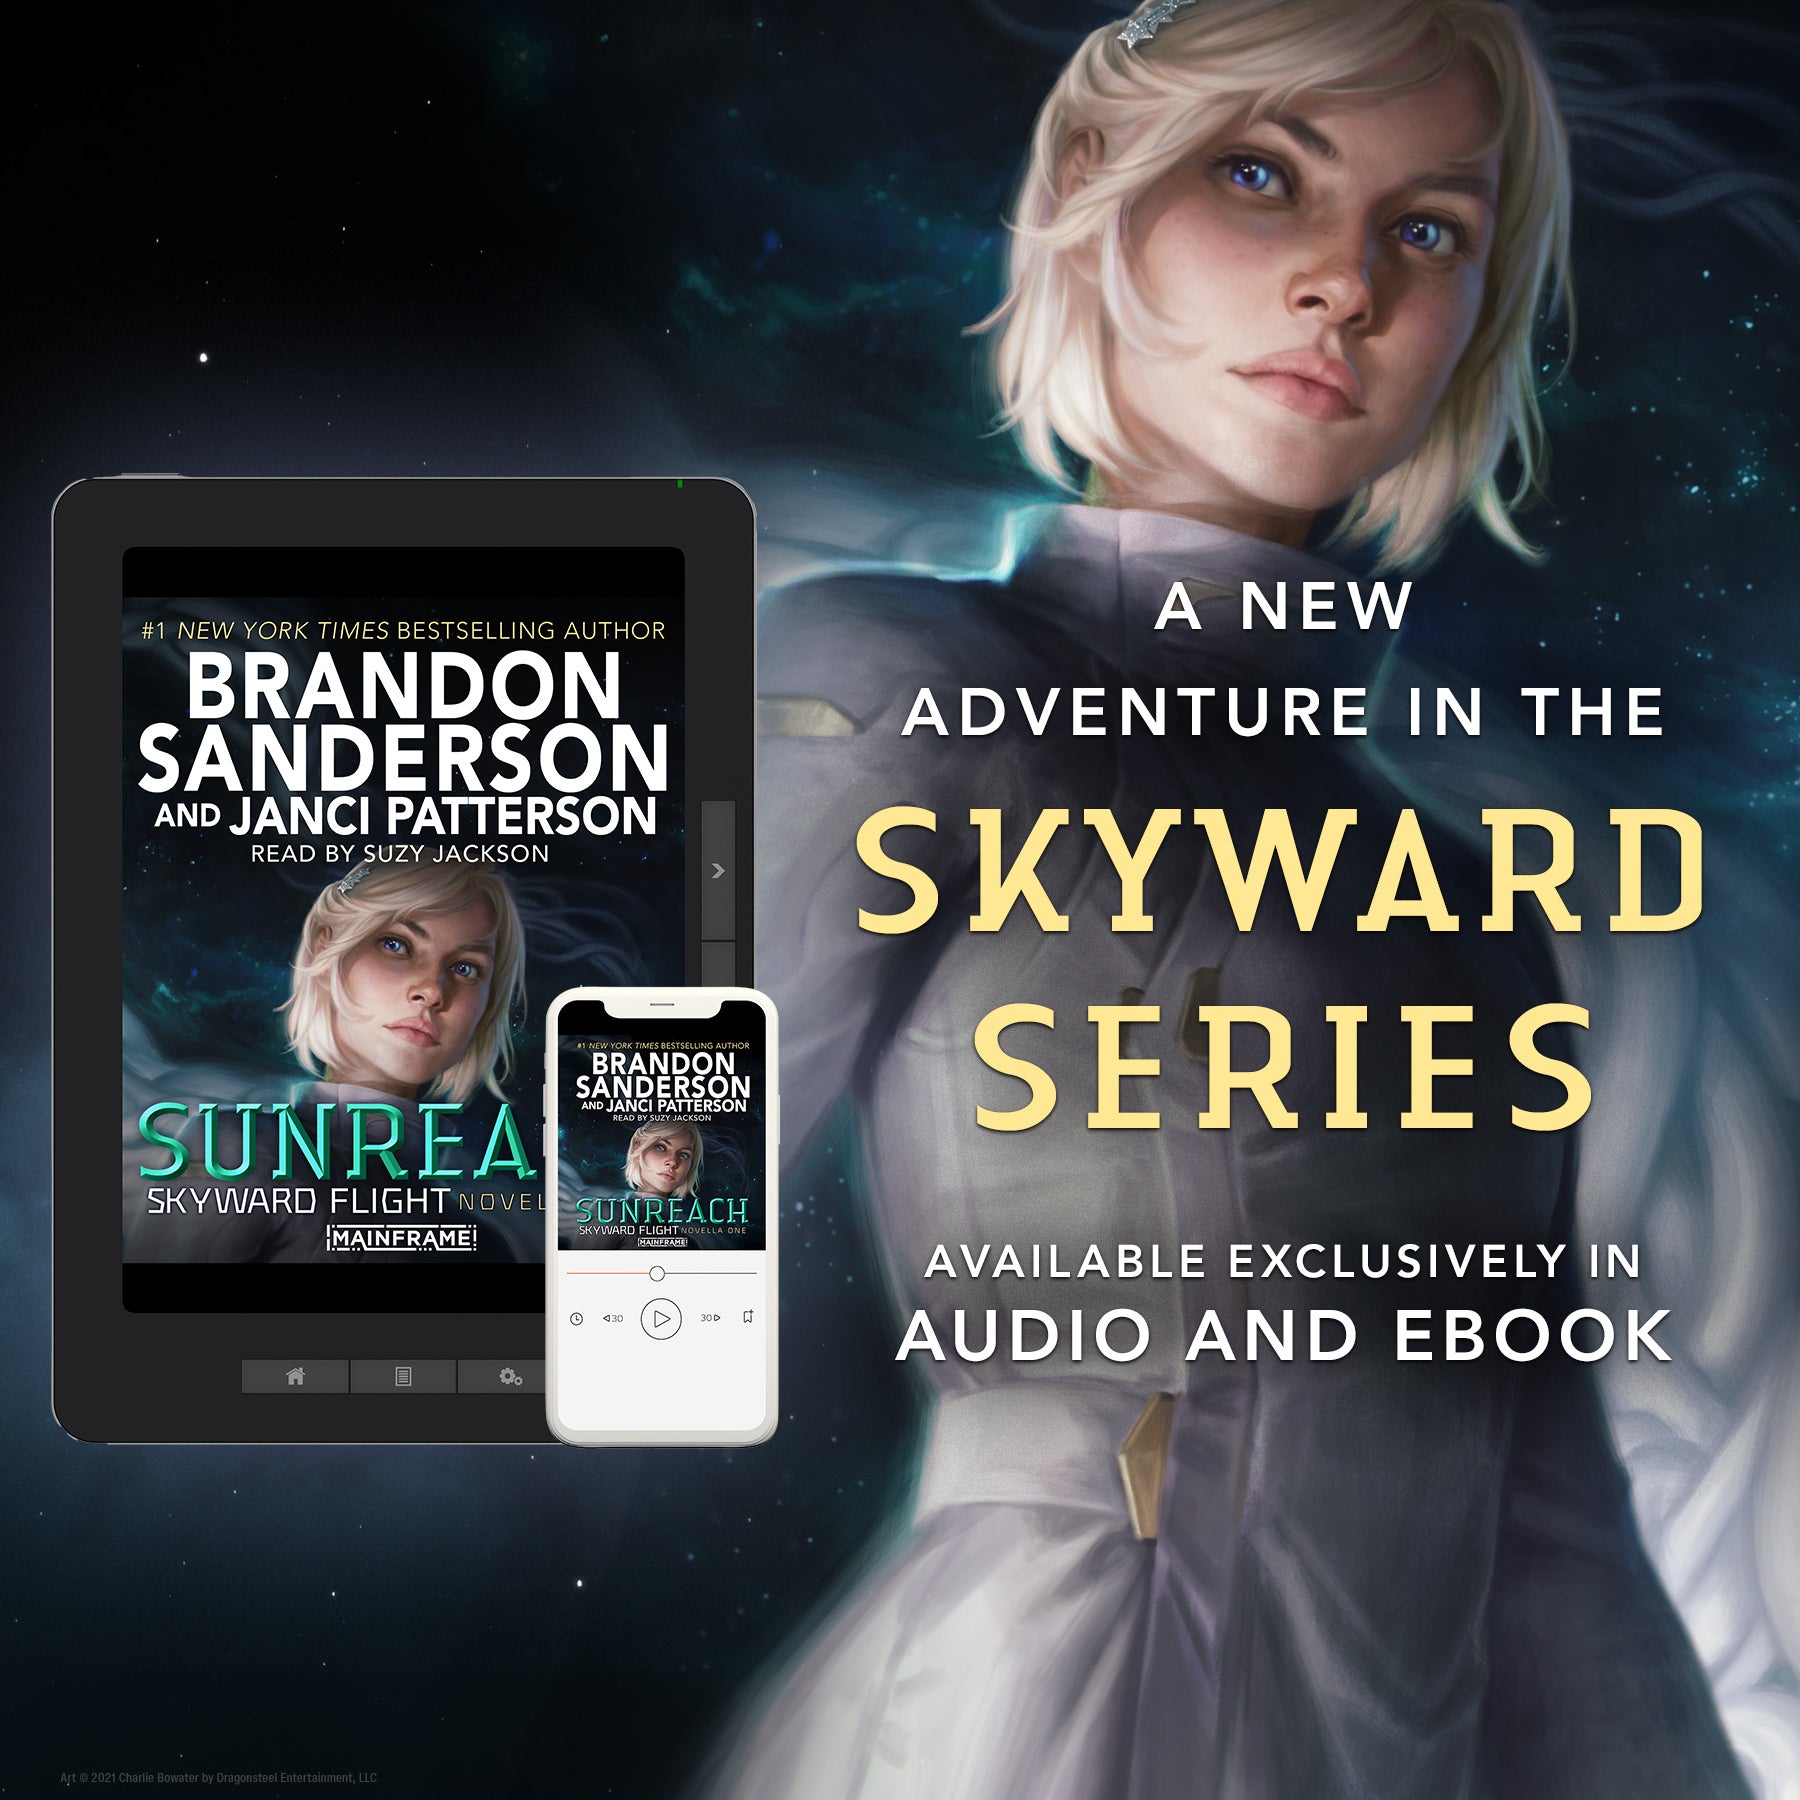 Start Reading Skyward by Brandon Sanderson - Underlined